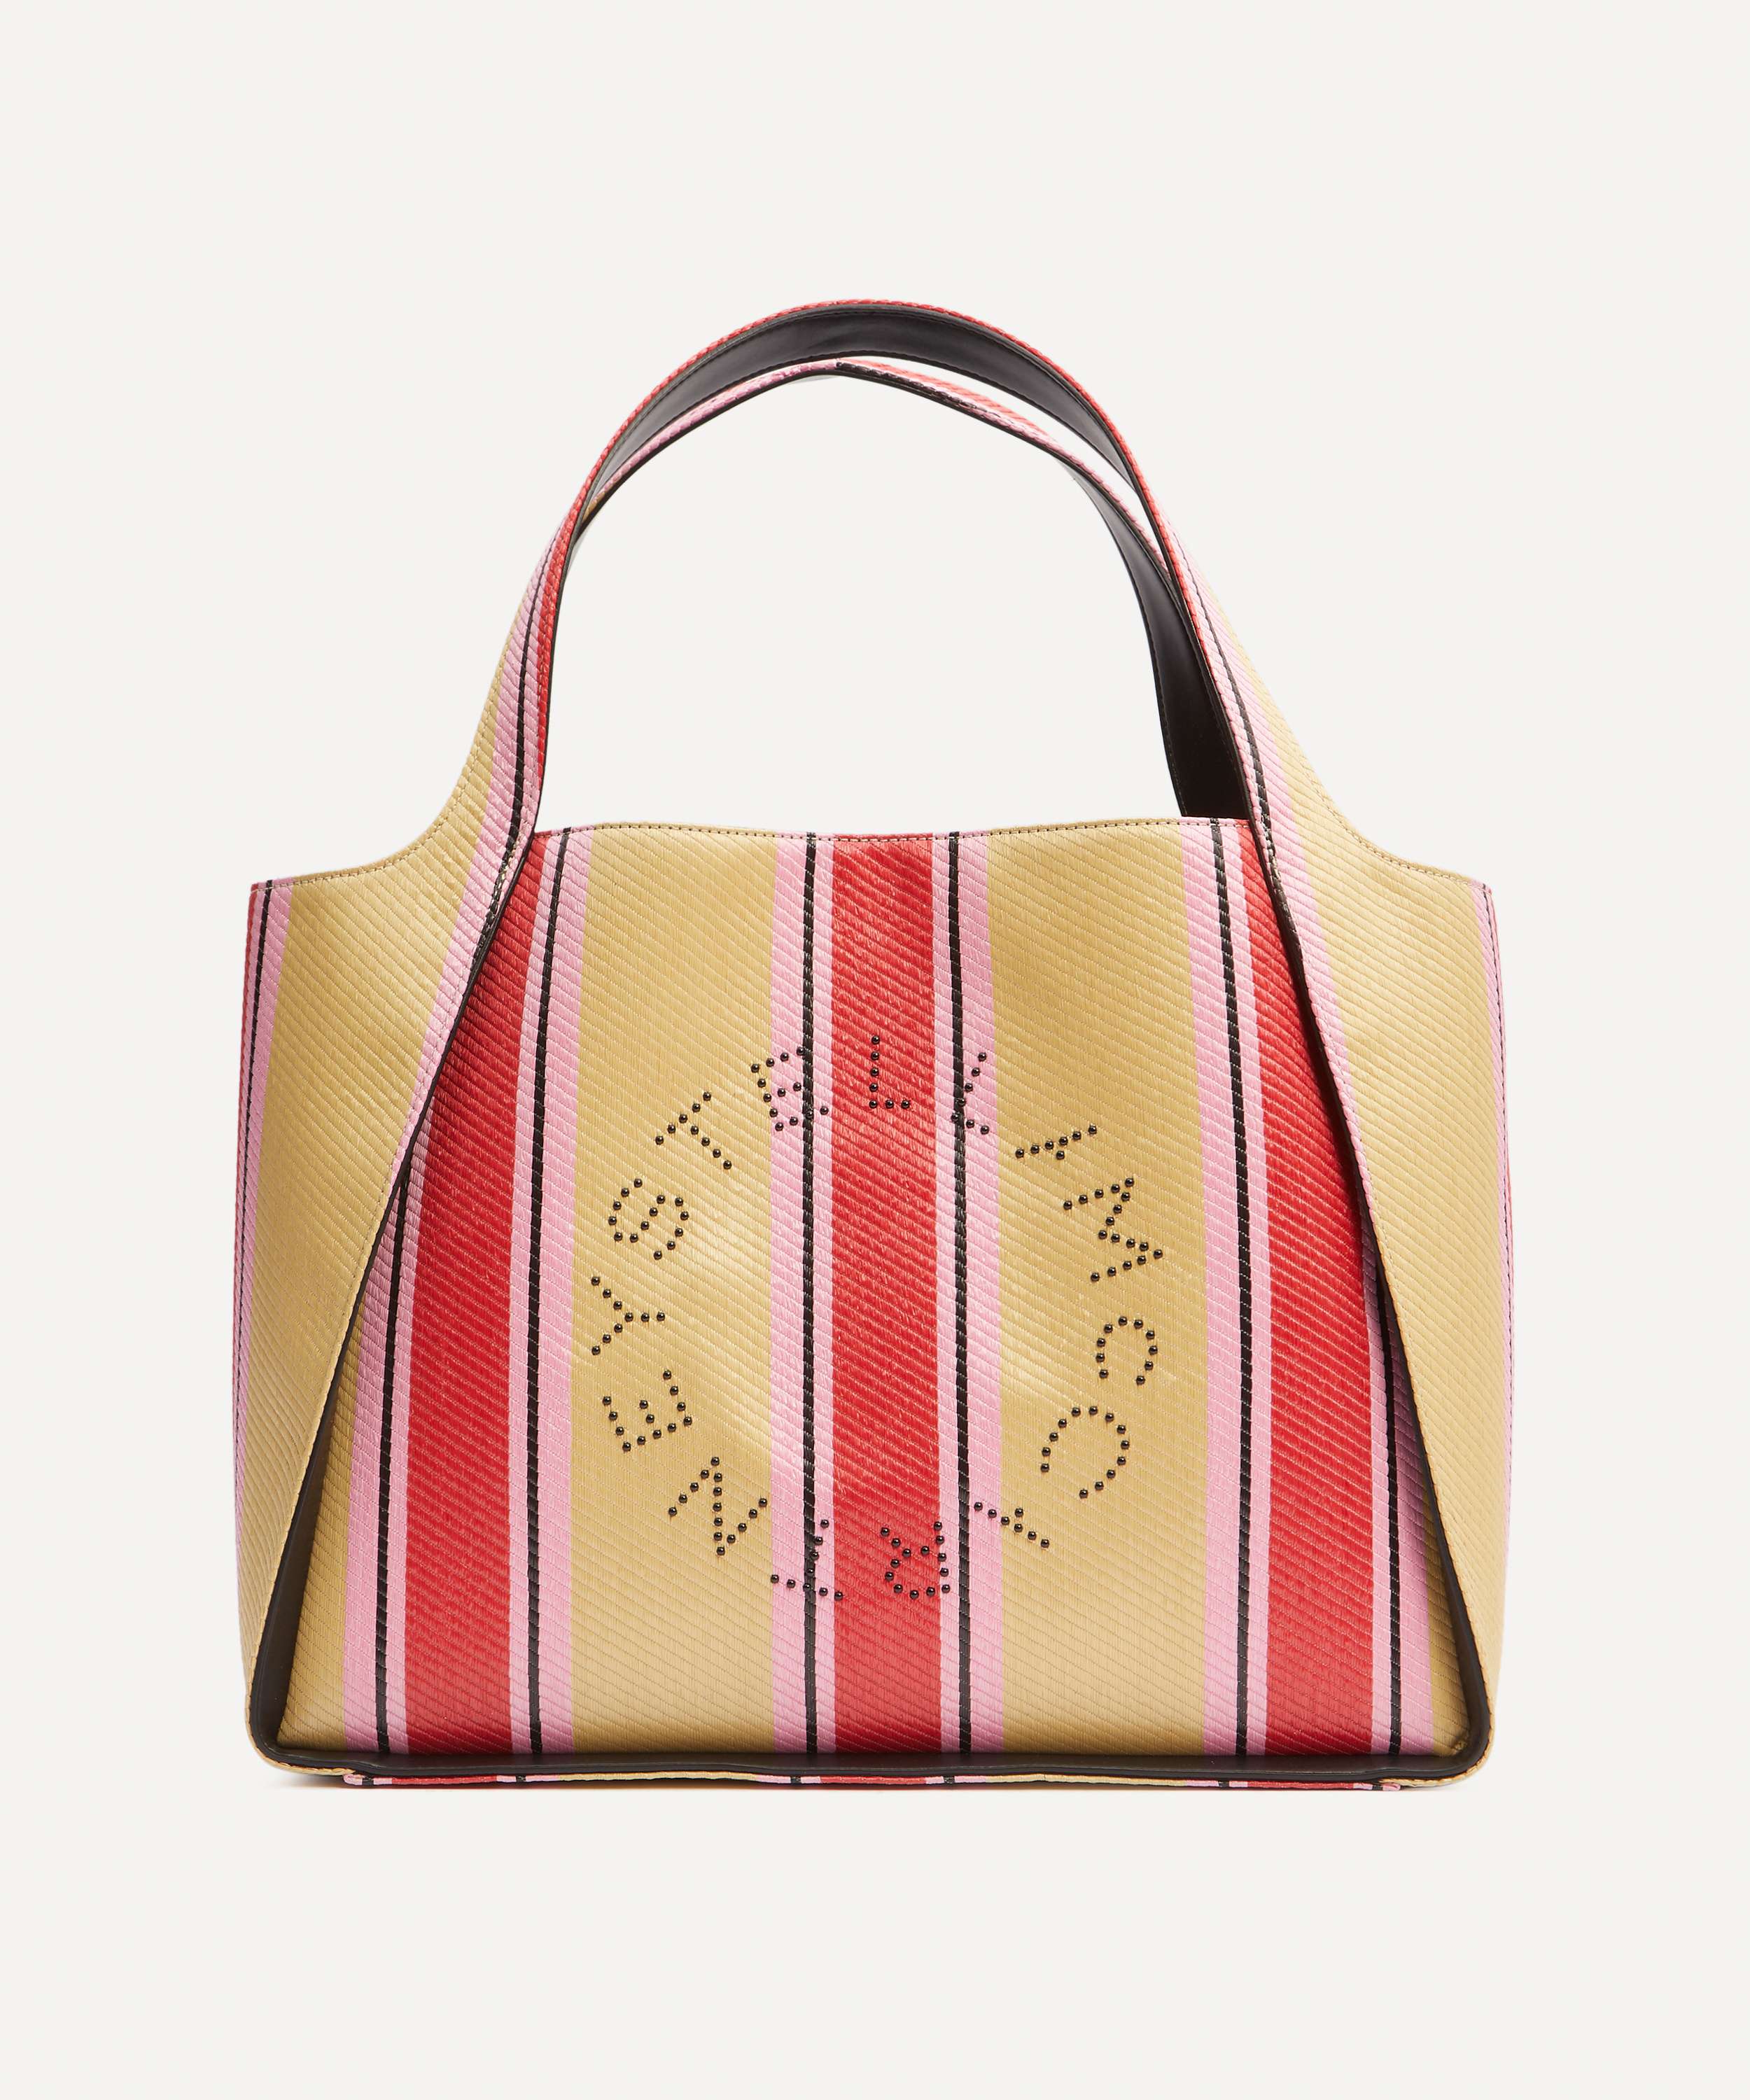 Issey Miyake's Bao Bao bag celebrates 10 years as a design icon